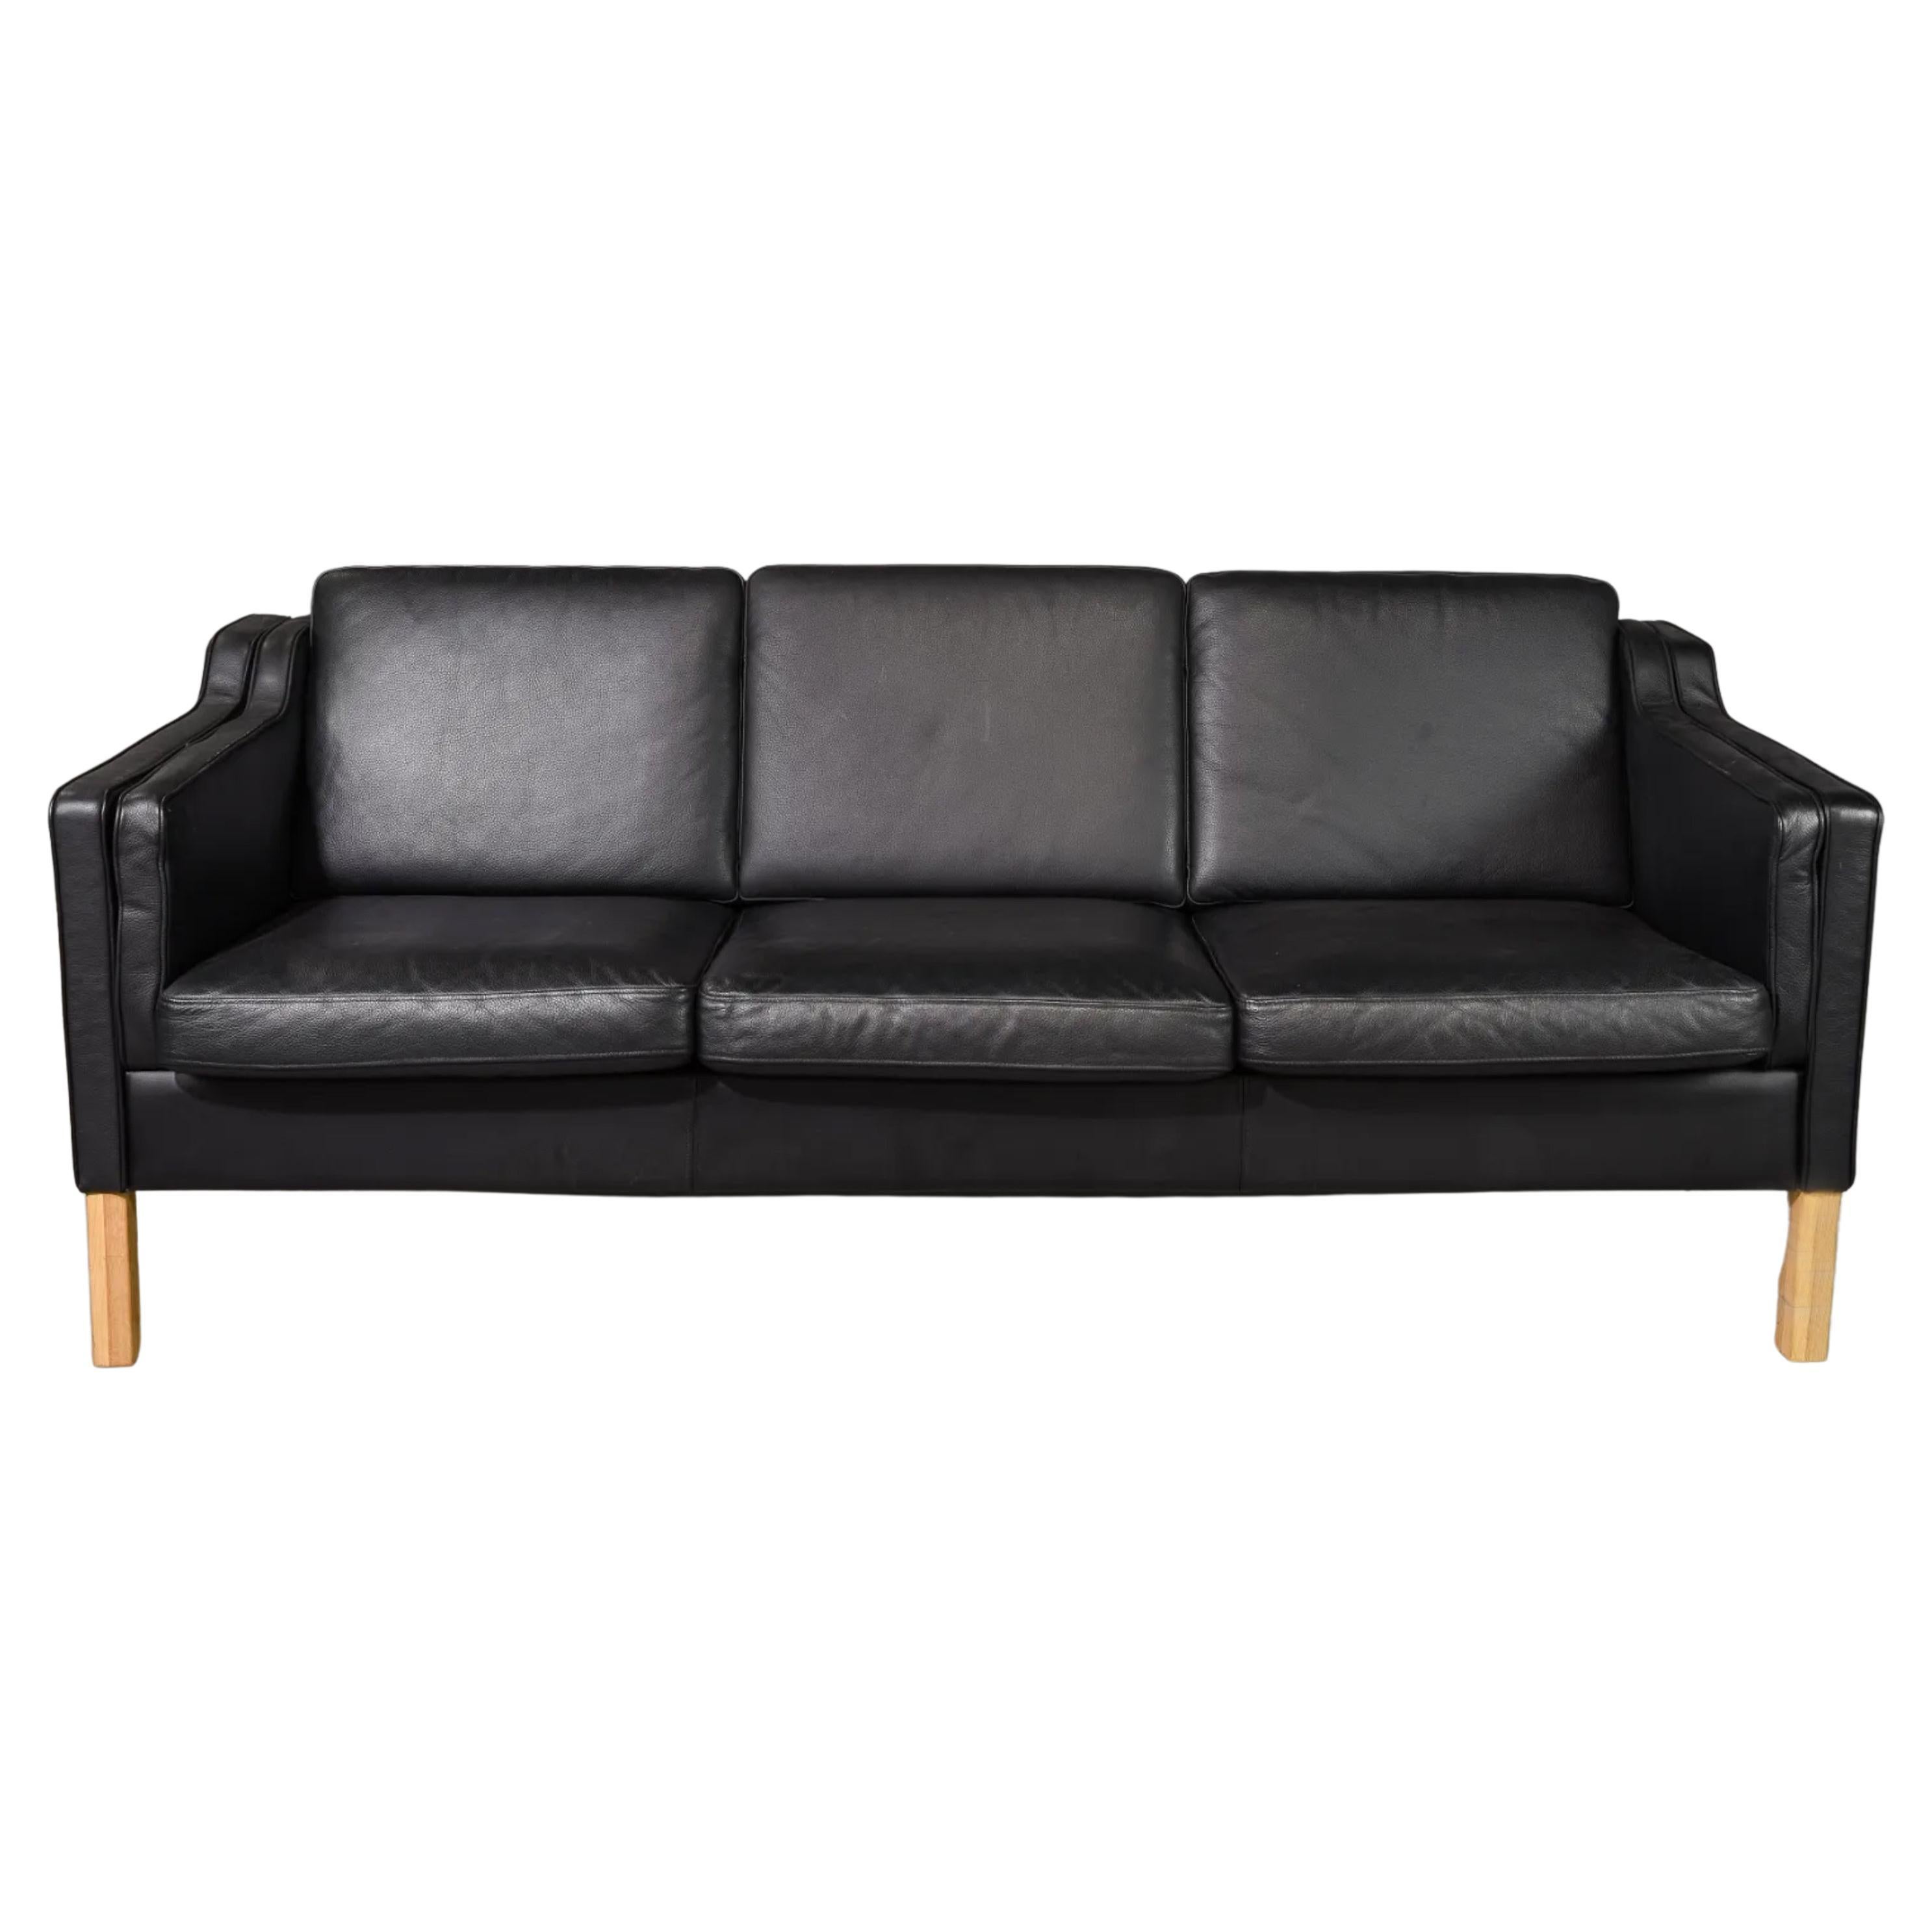 Woodwork Superb Midcentury Danish Modern Beautiful Black Leather 3 Seat Sofa Birch Legs For Sale